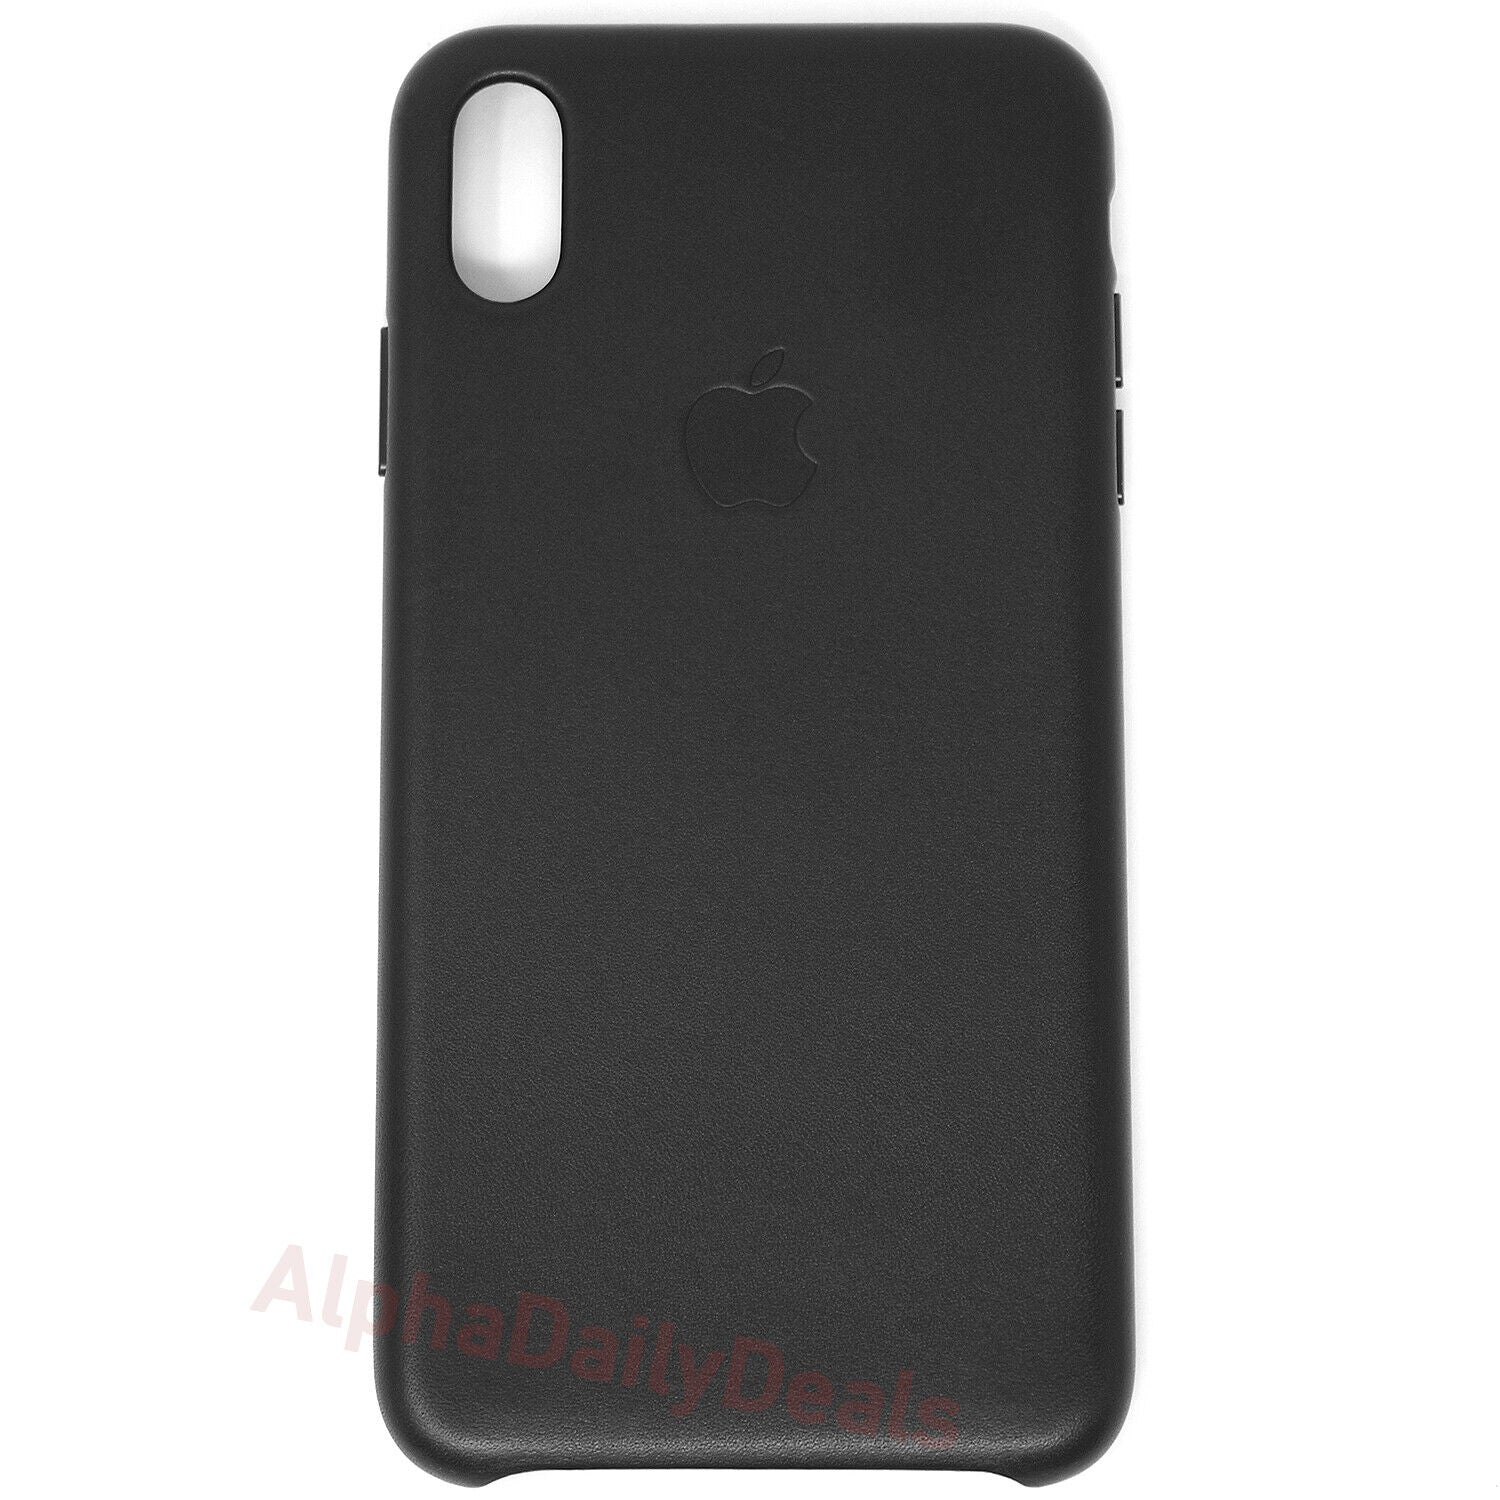 Genuine OEM Apple iPhone XS Max Black Leather Case